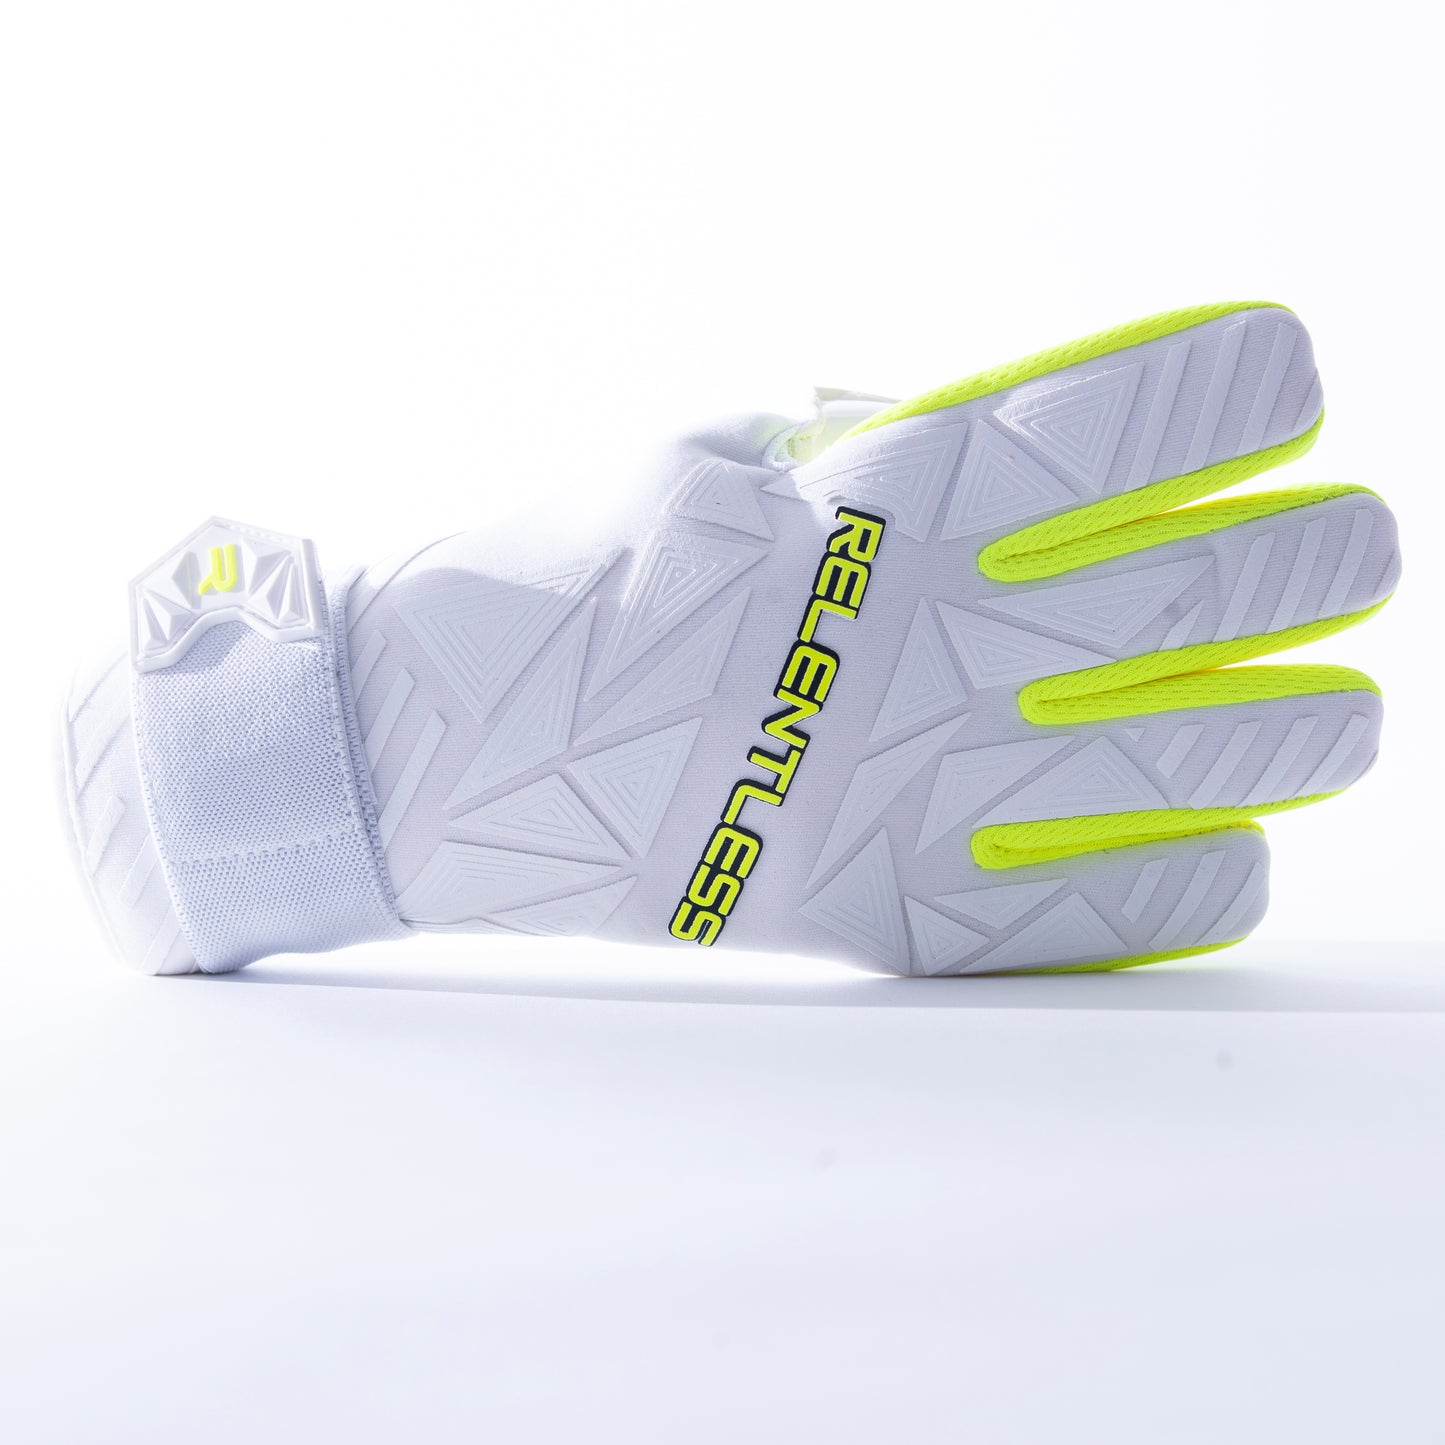 White and neon yellow goalkeeper glove